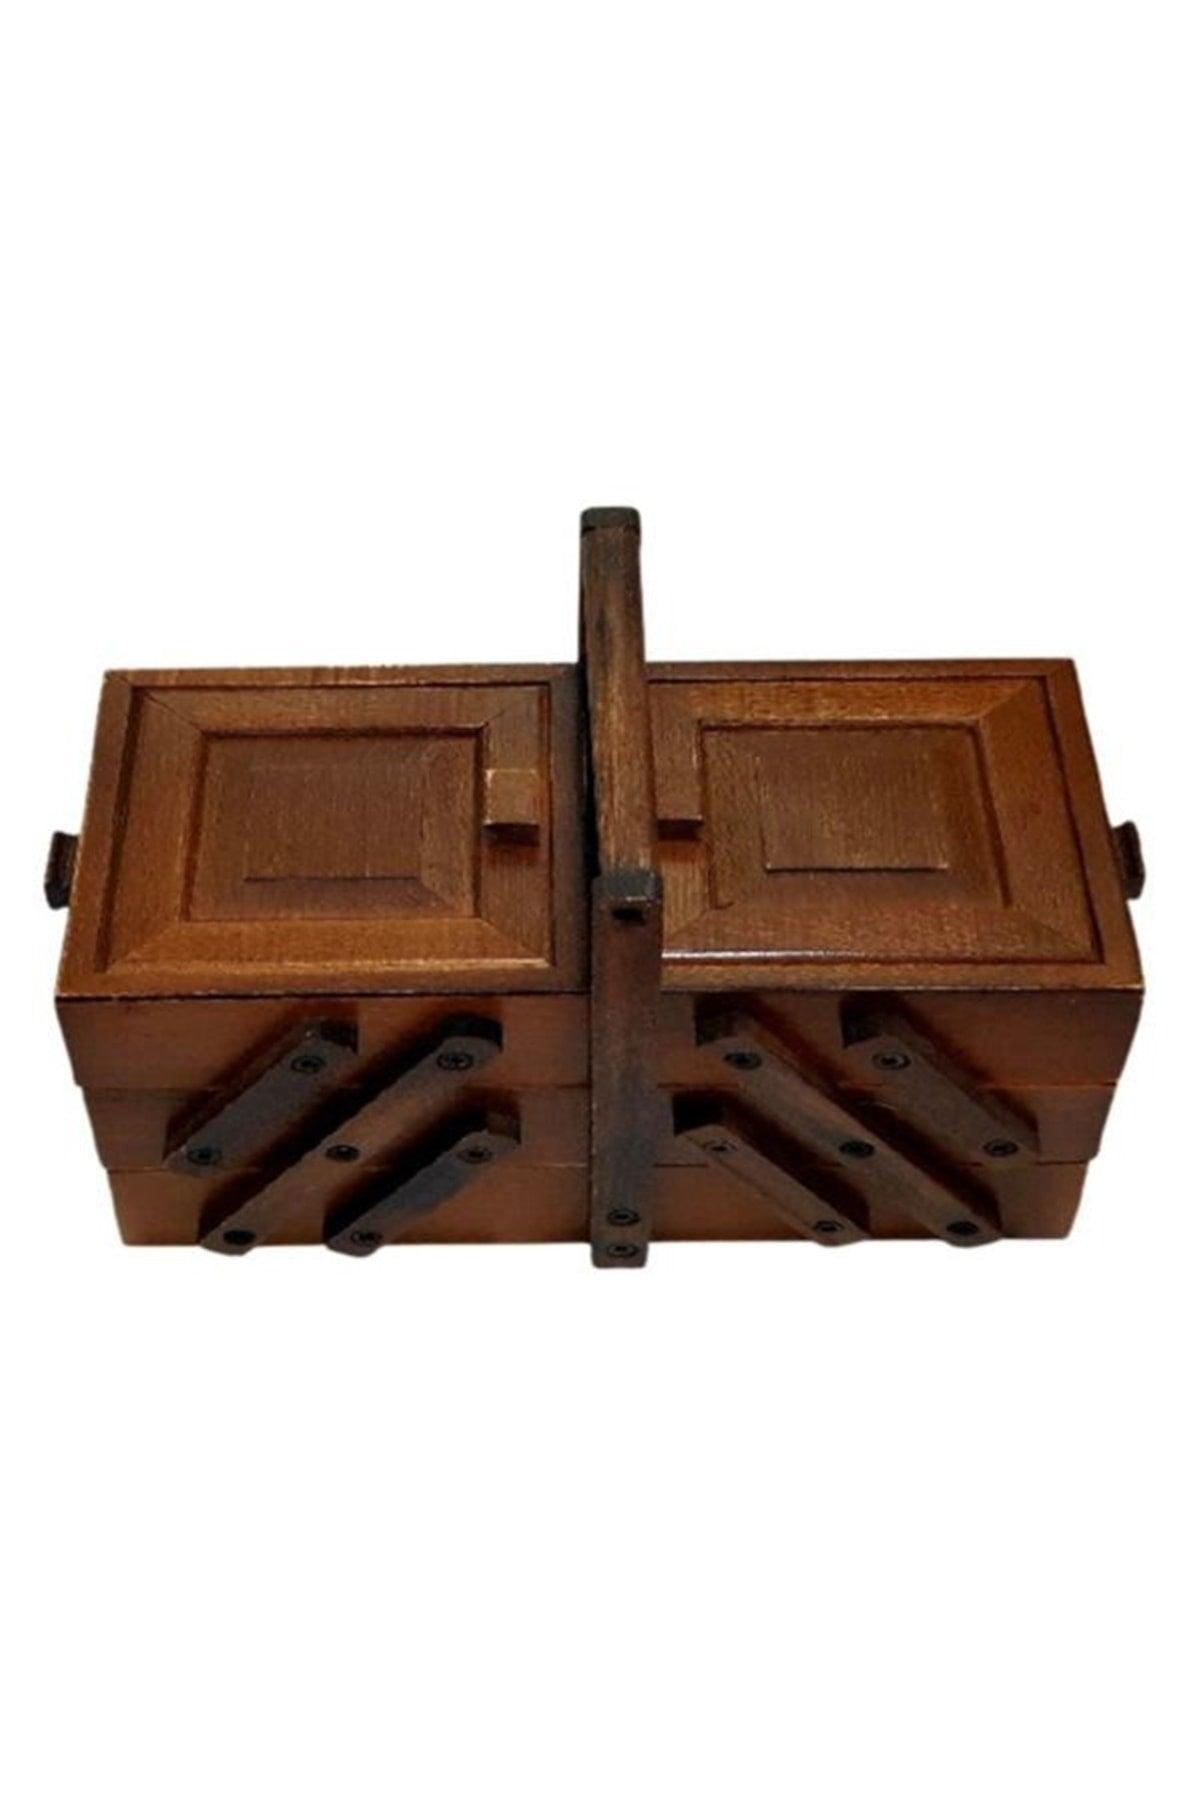 Decorative Sewing And Accessory Box Medium Size Organizer 3 Tiers 5 Eyes Jewelry Box - Swordslife